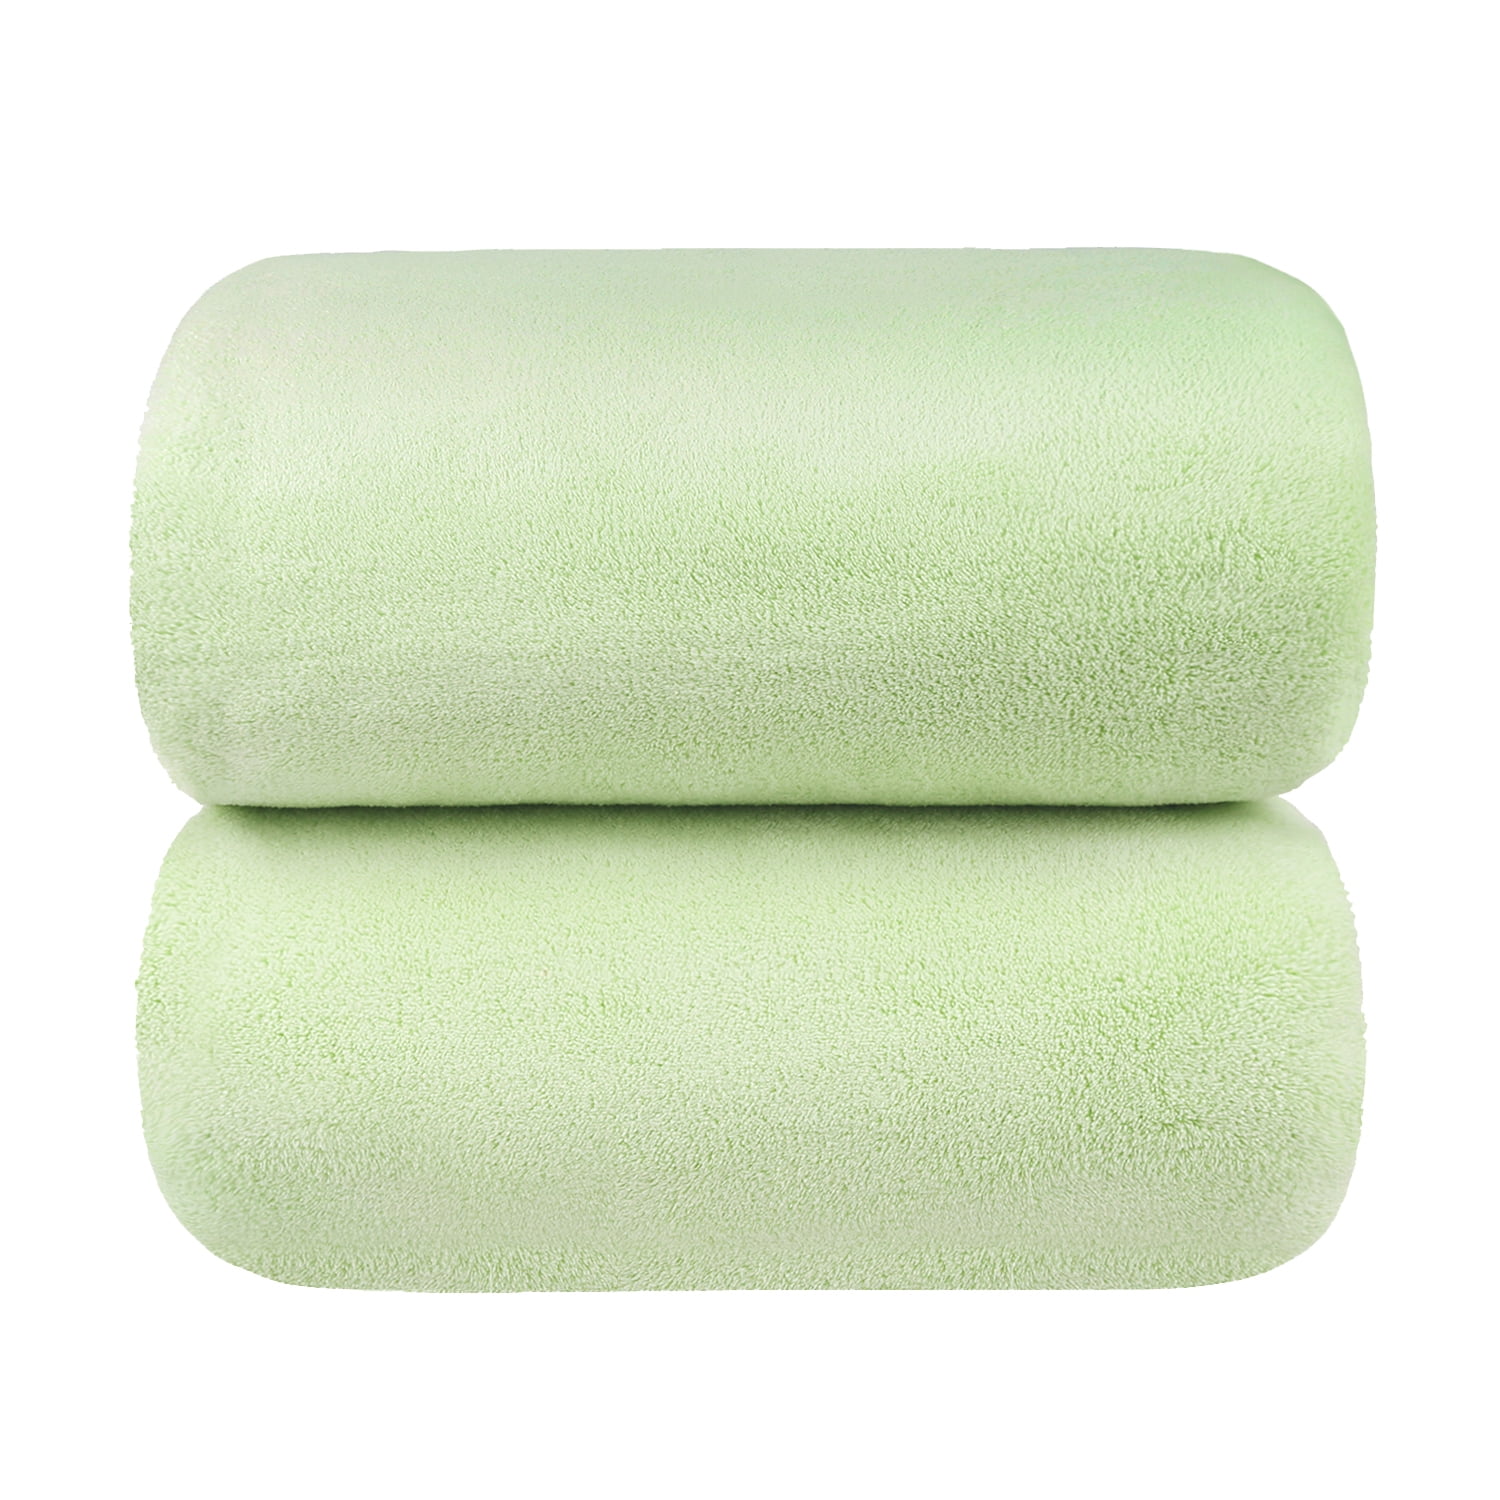 NC 2 Pack Bath Towels 35x 70,Super Soft and Absorbent,Lint Free